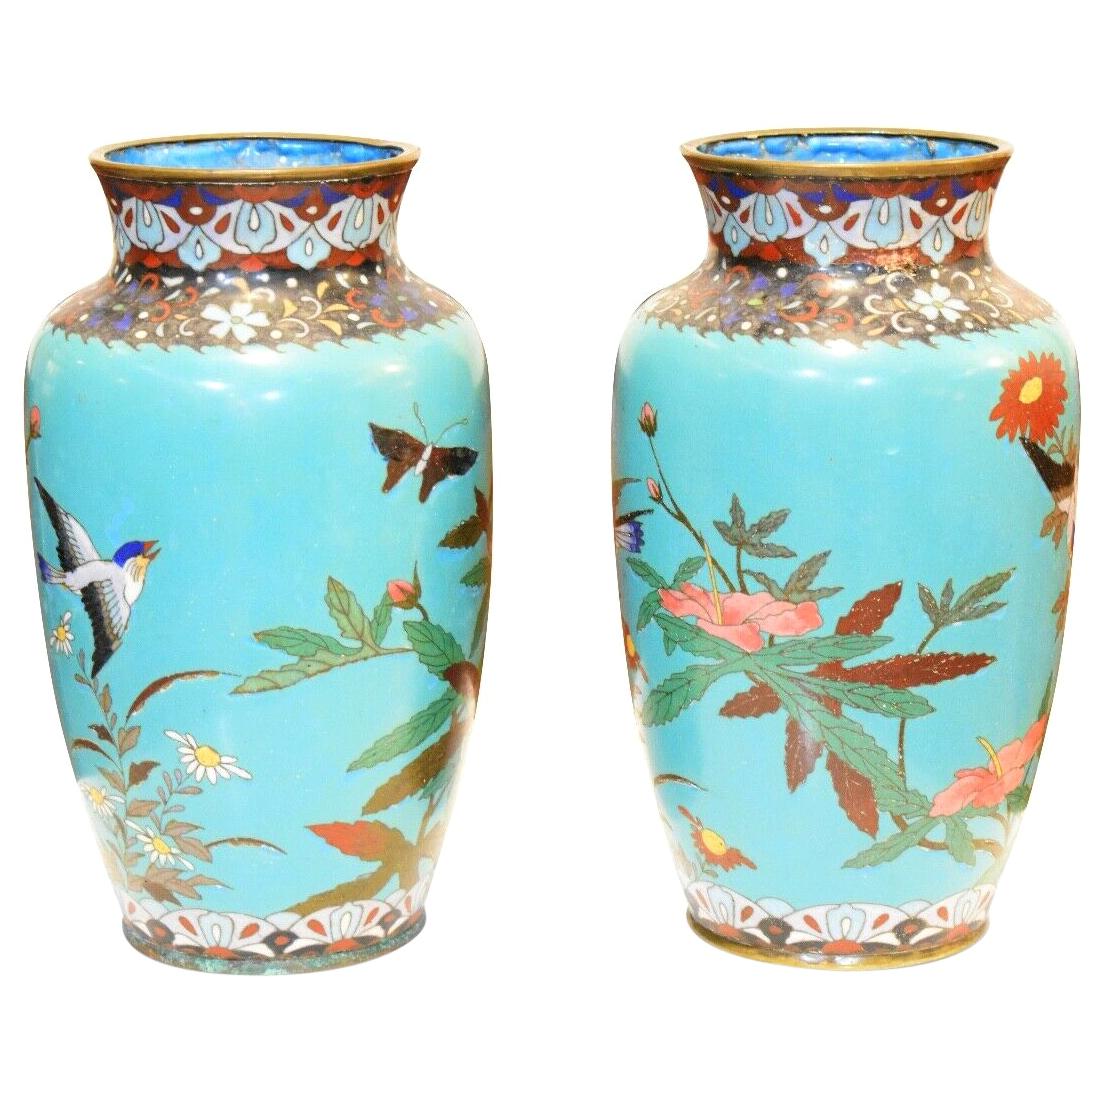 Pair of 19th Century Japanese Cloisonné Vases